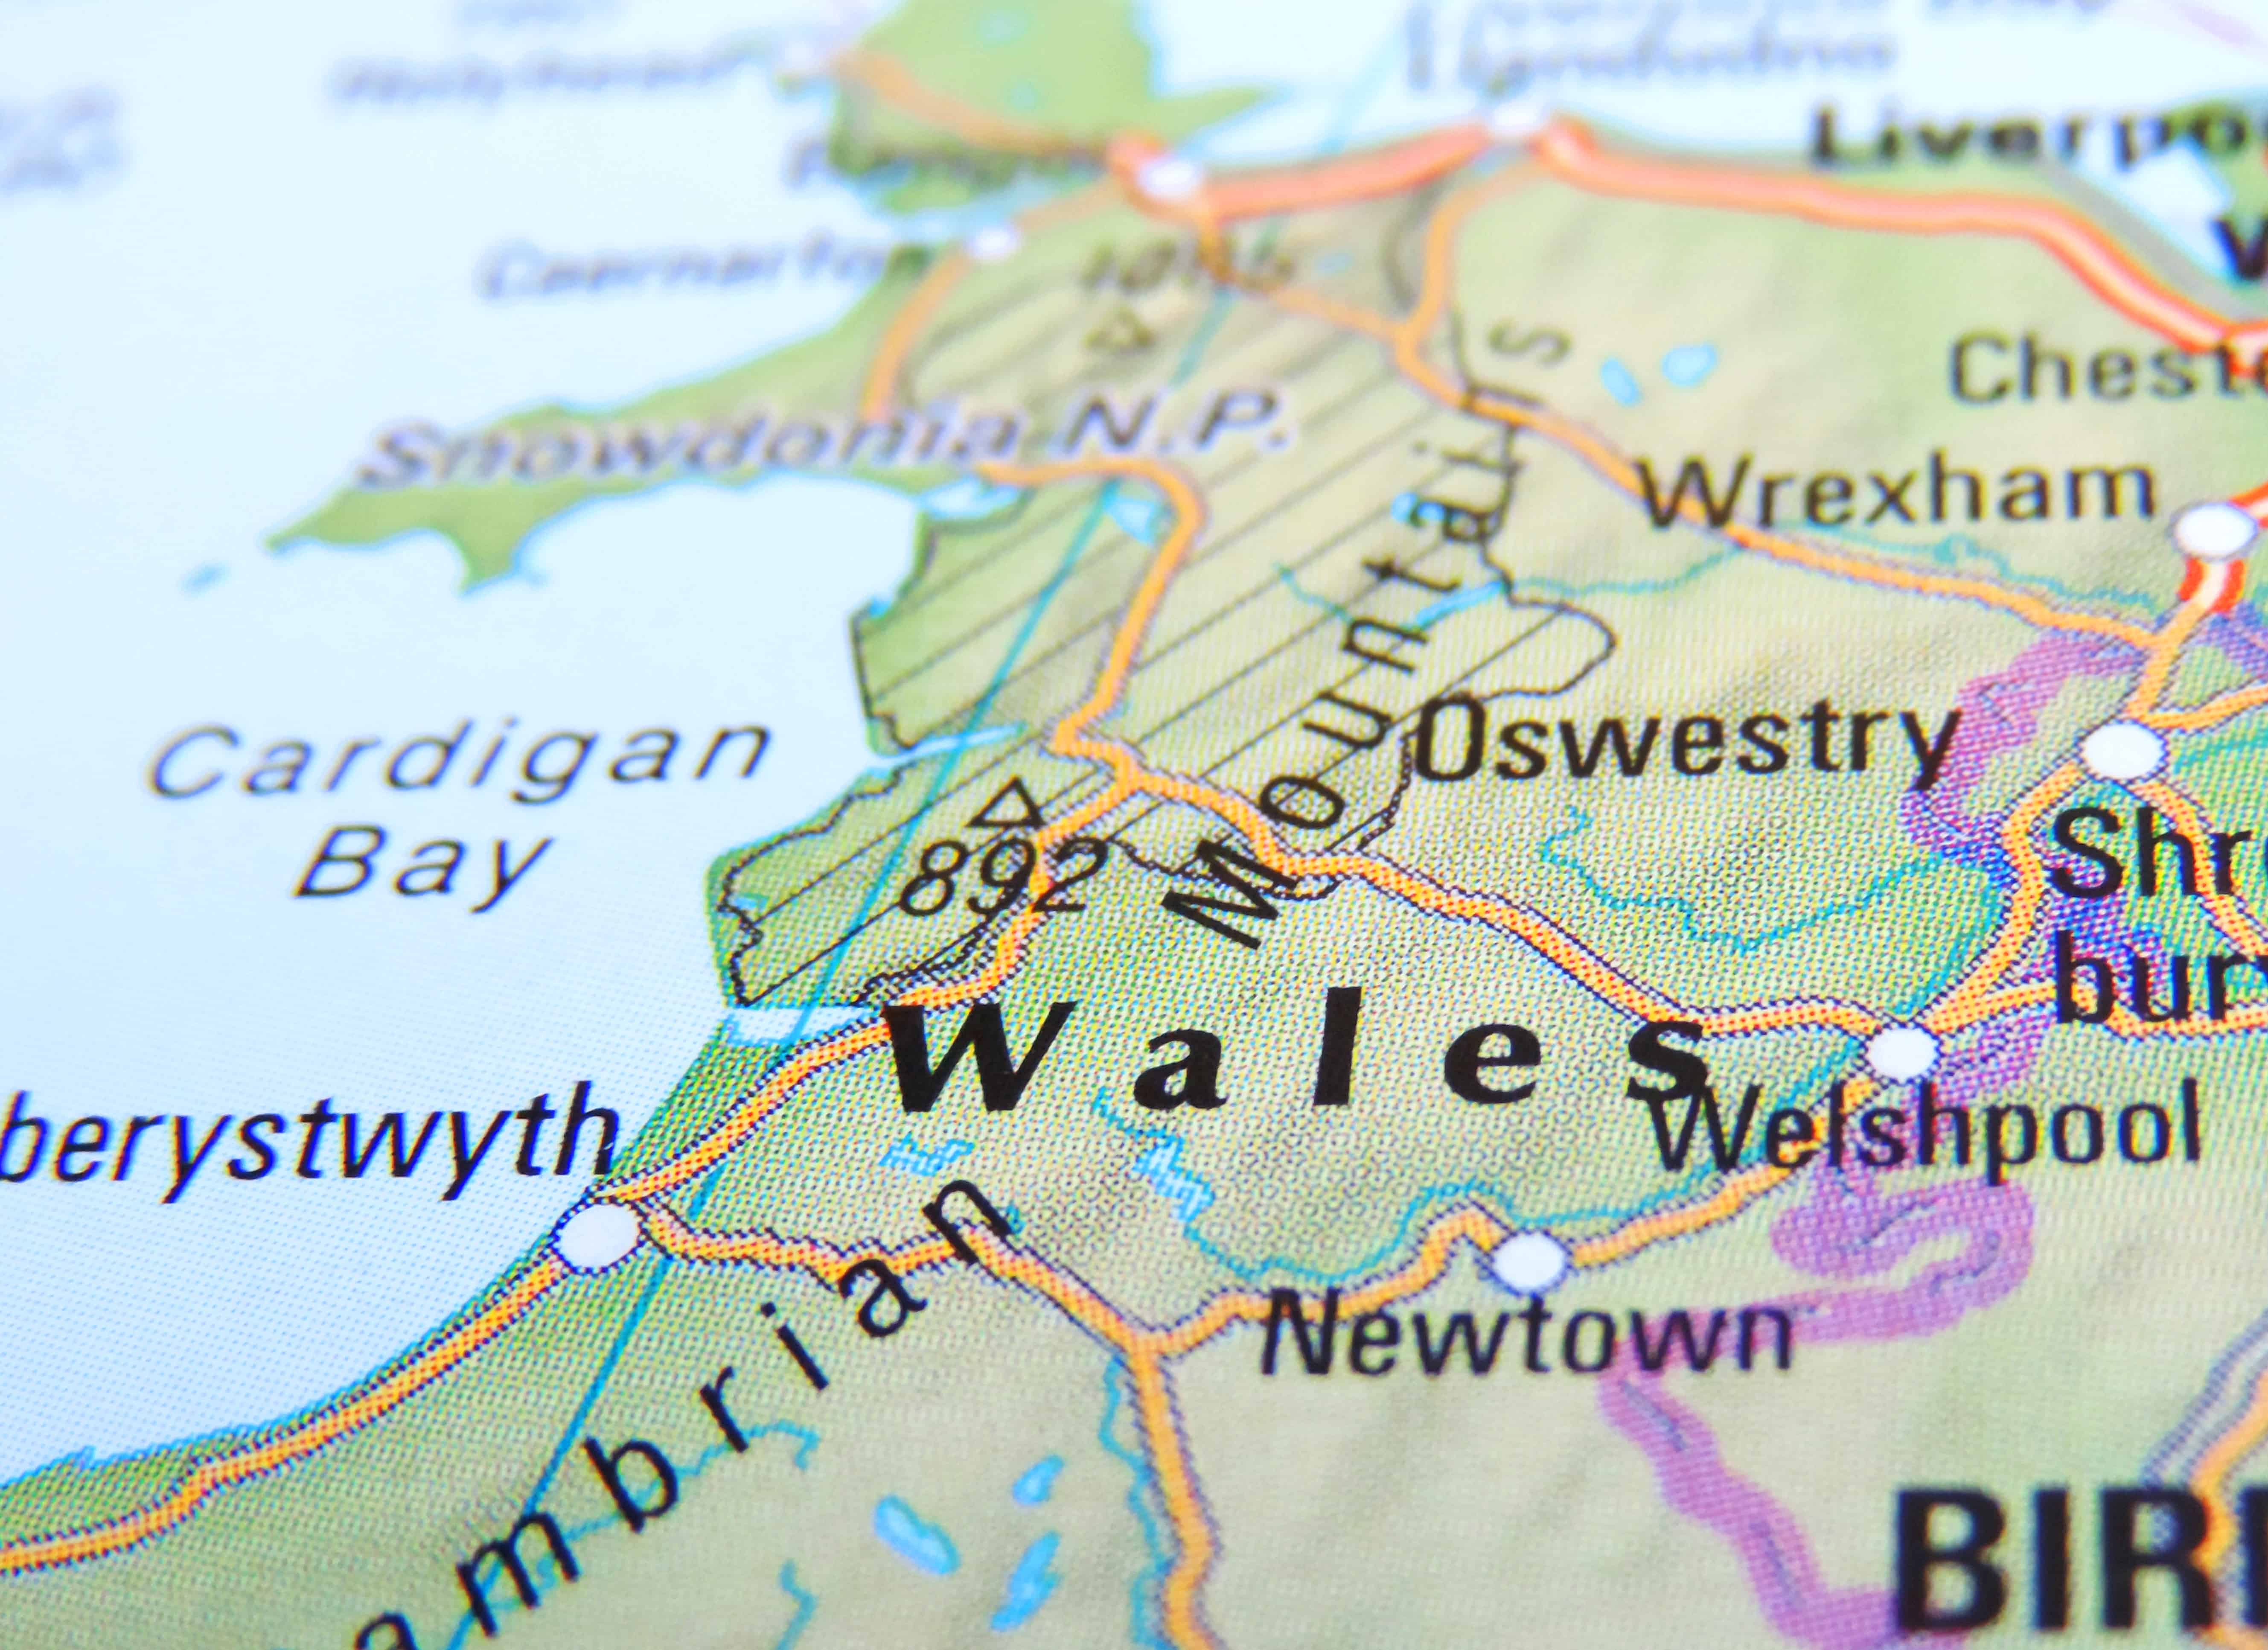 Welsh government also extends SDLT holiday until 30 June